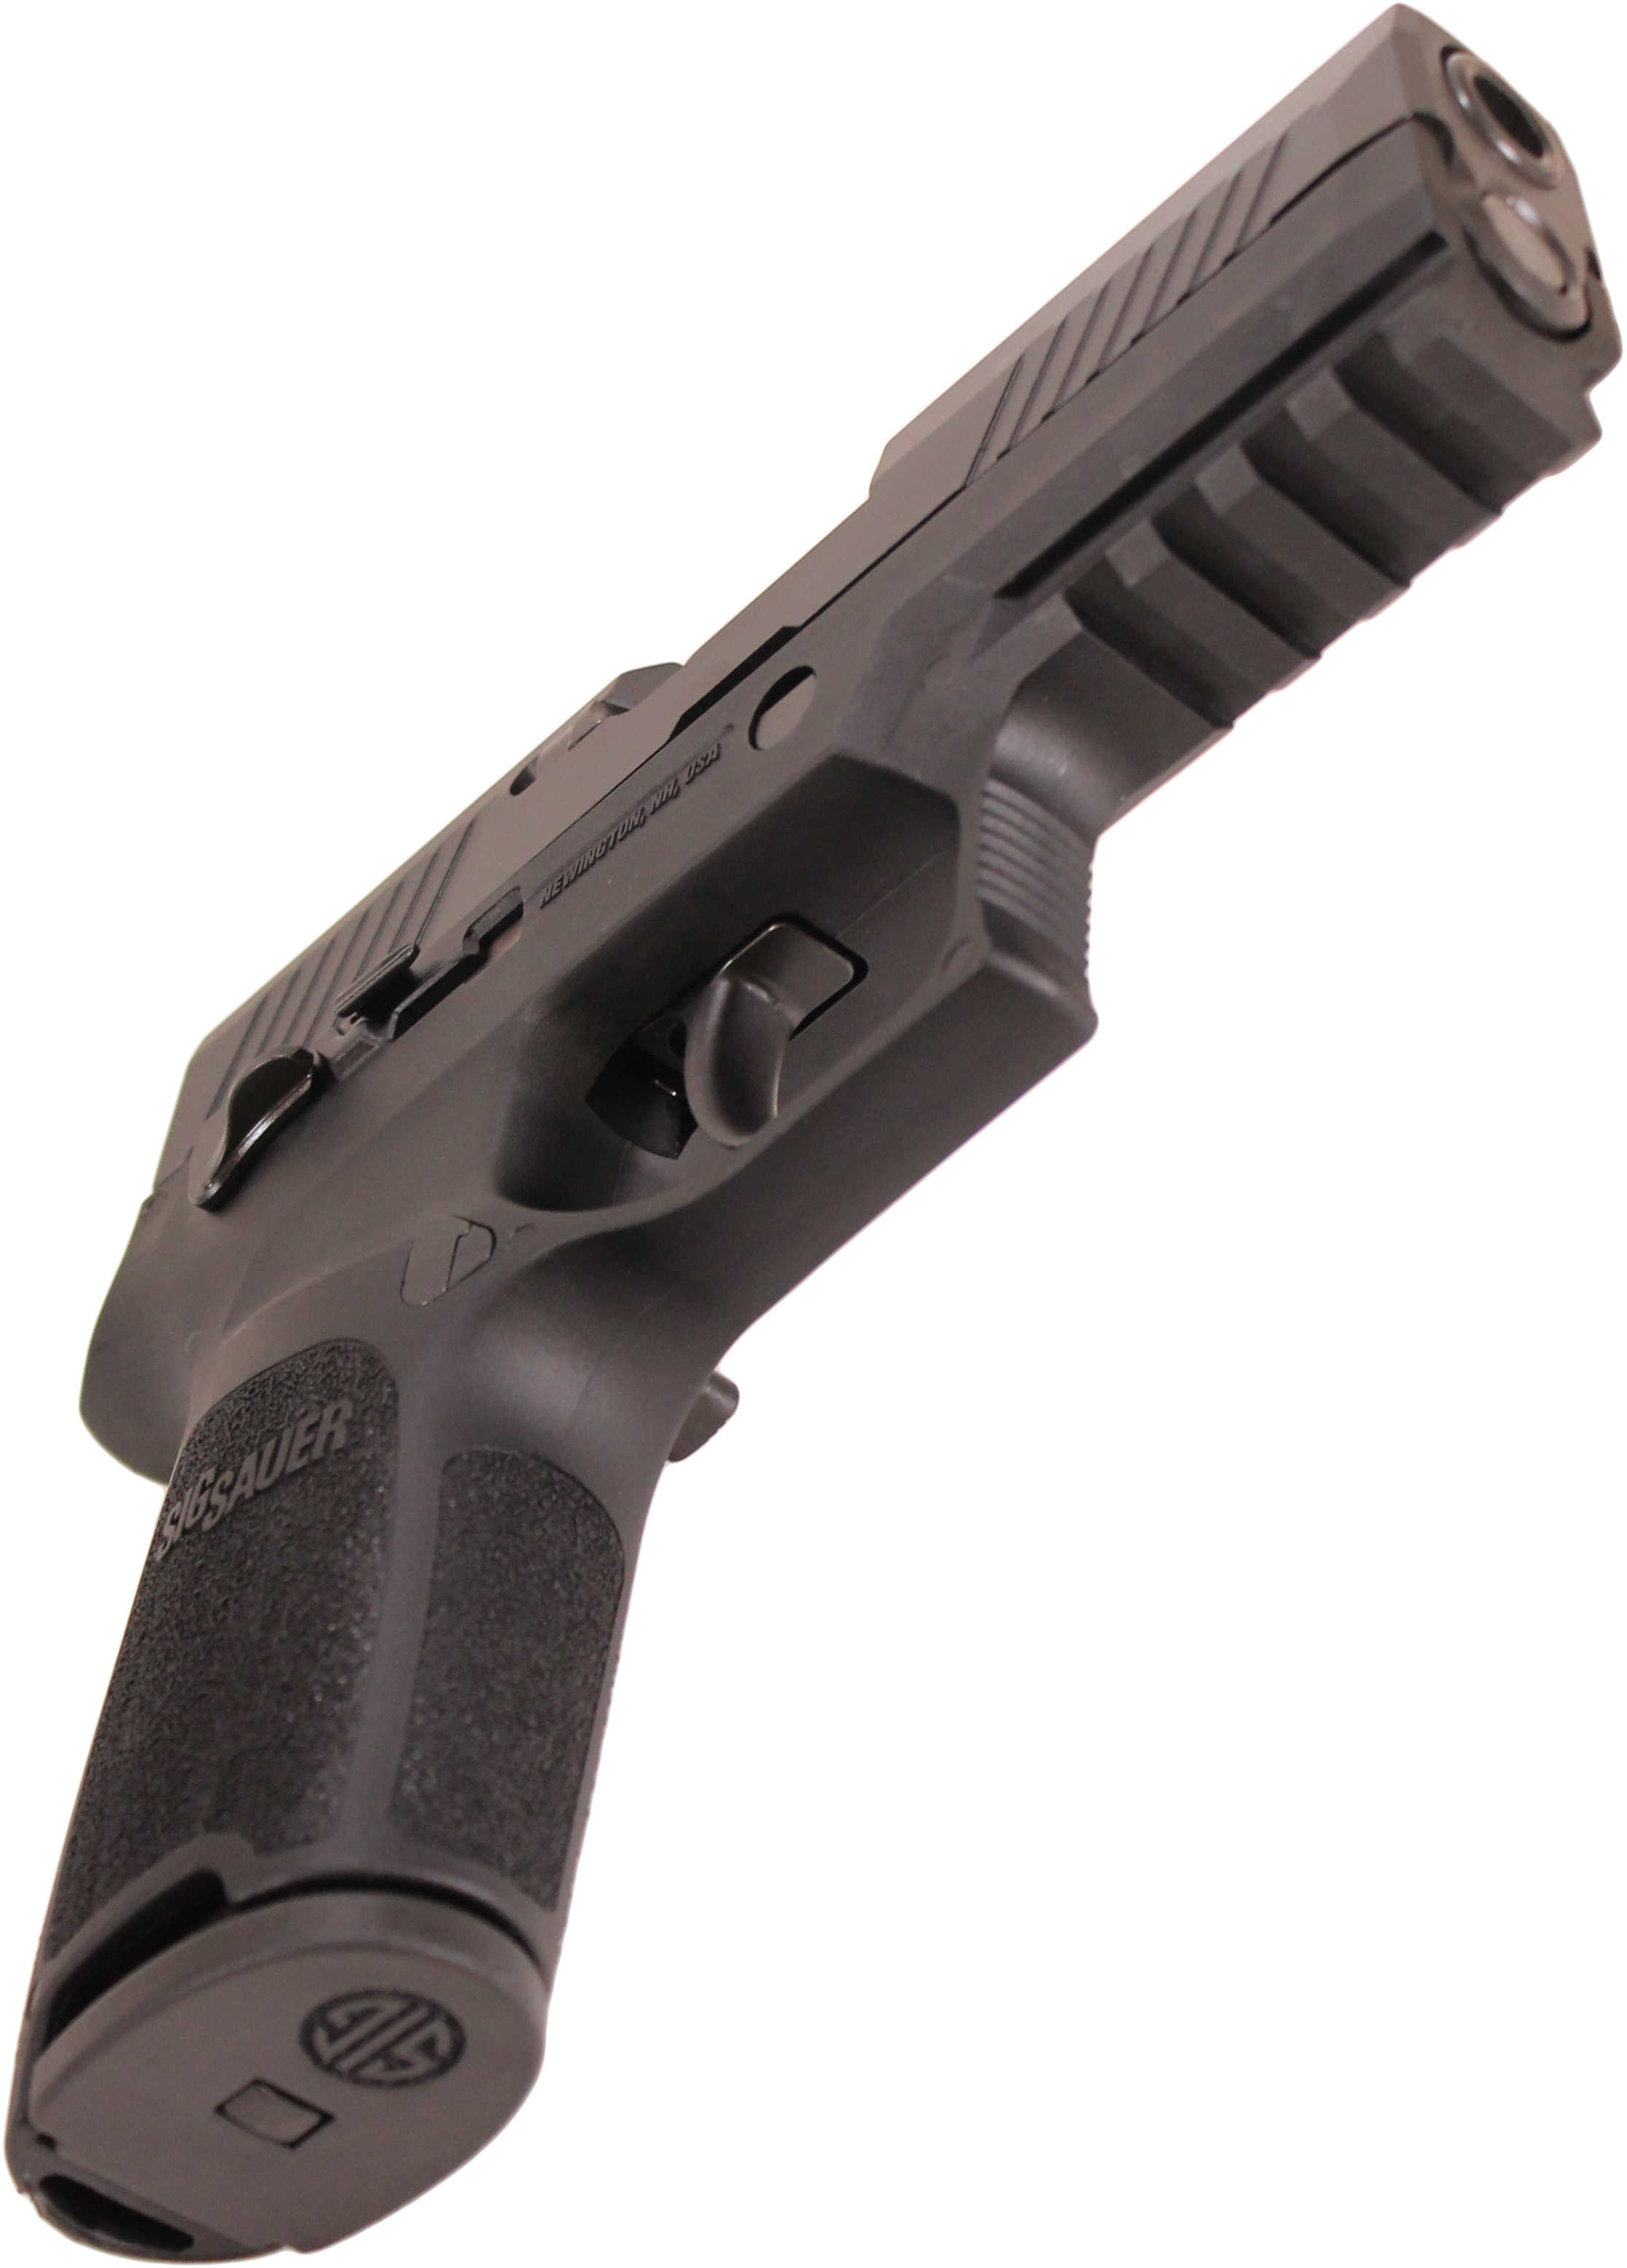 SIG Sauer P320 Nitron Compact Semi Auto Pistol 9mm Luger 3.9" Barrel 10 Rounds SIGLITE Night Sights